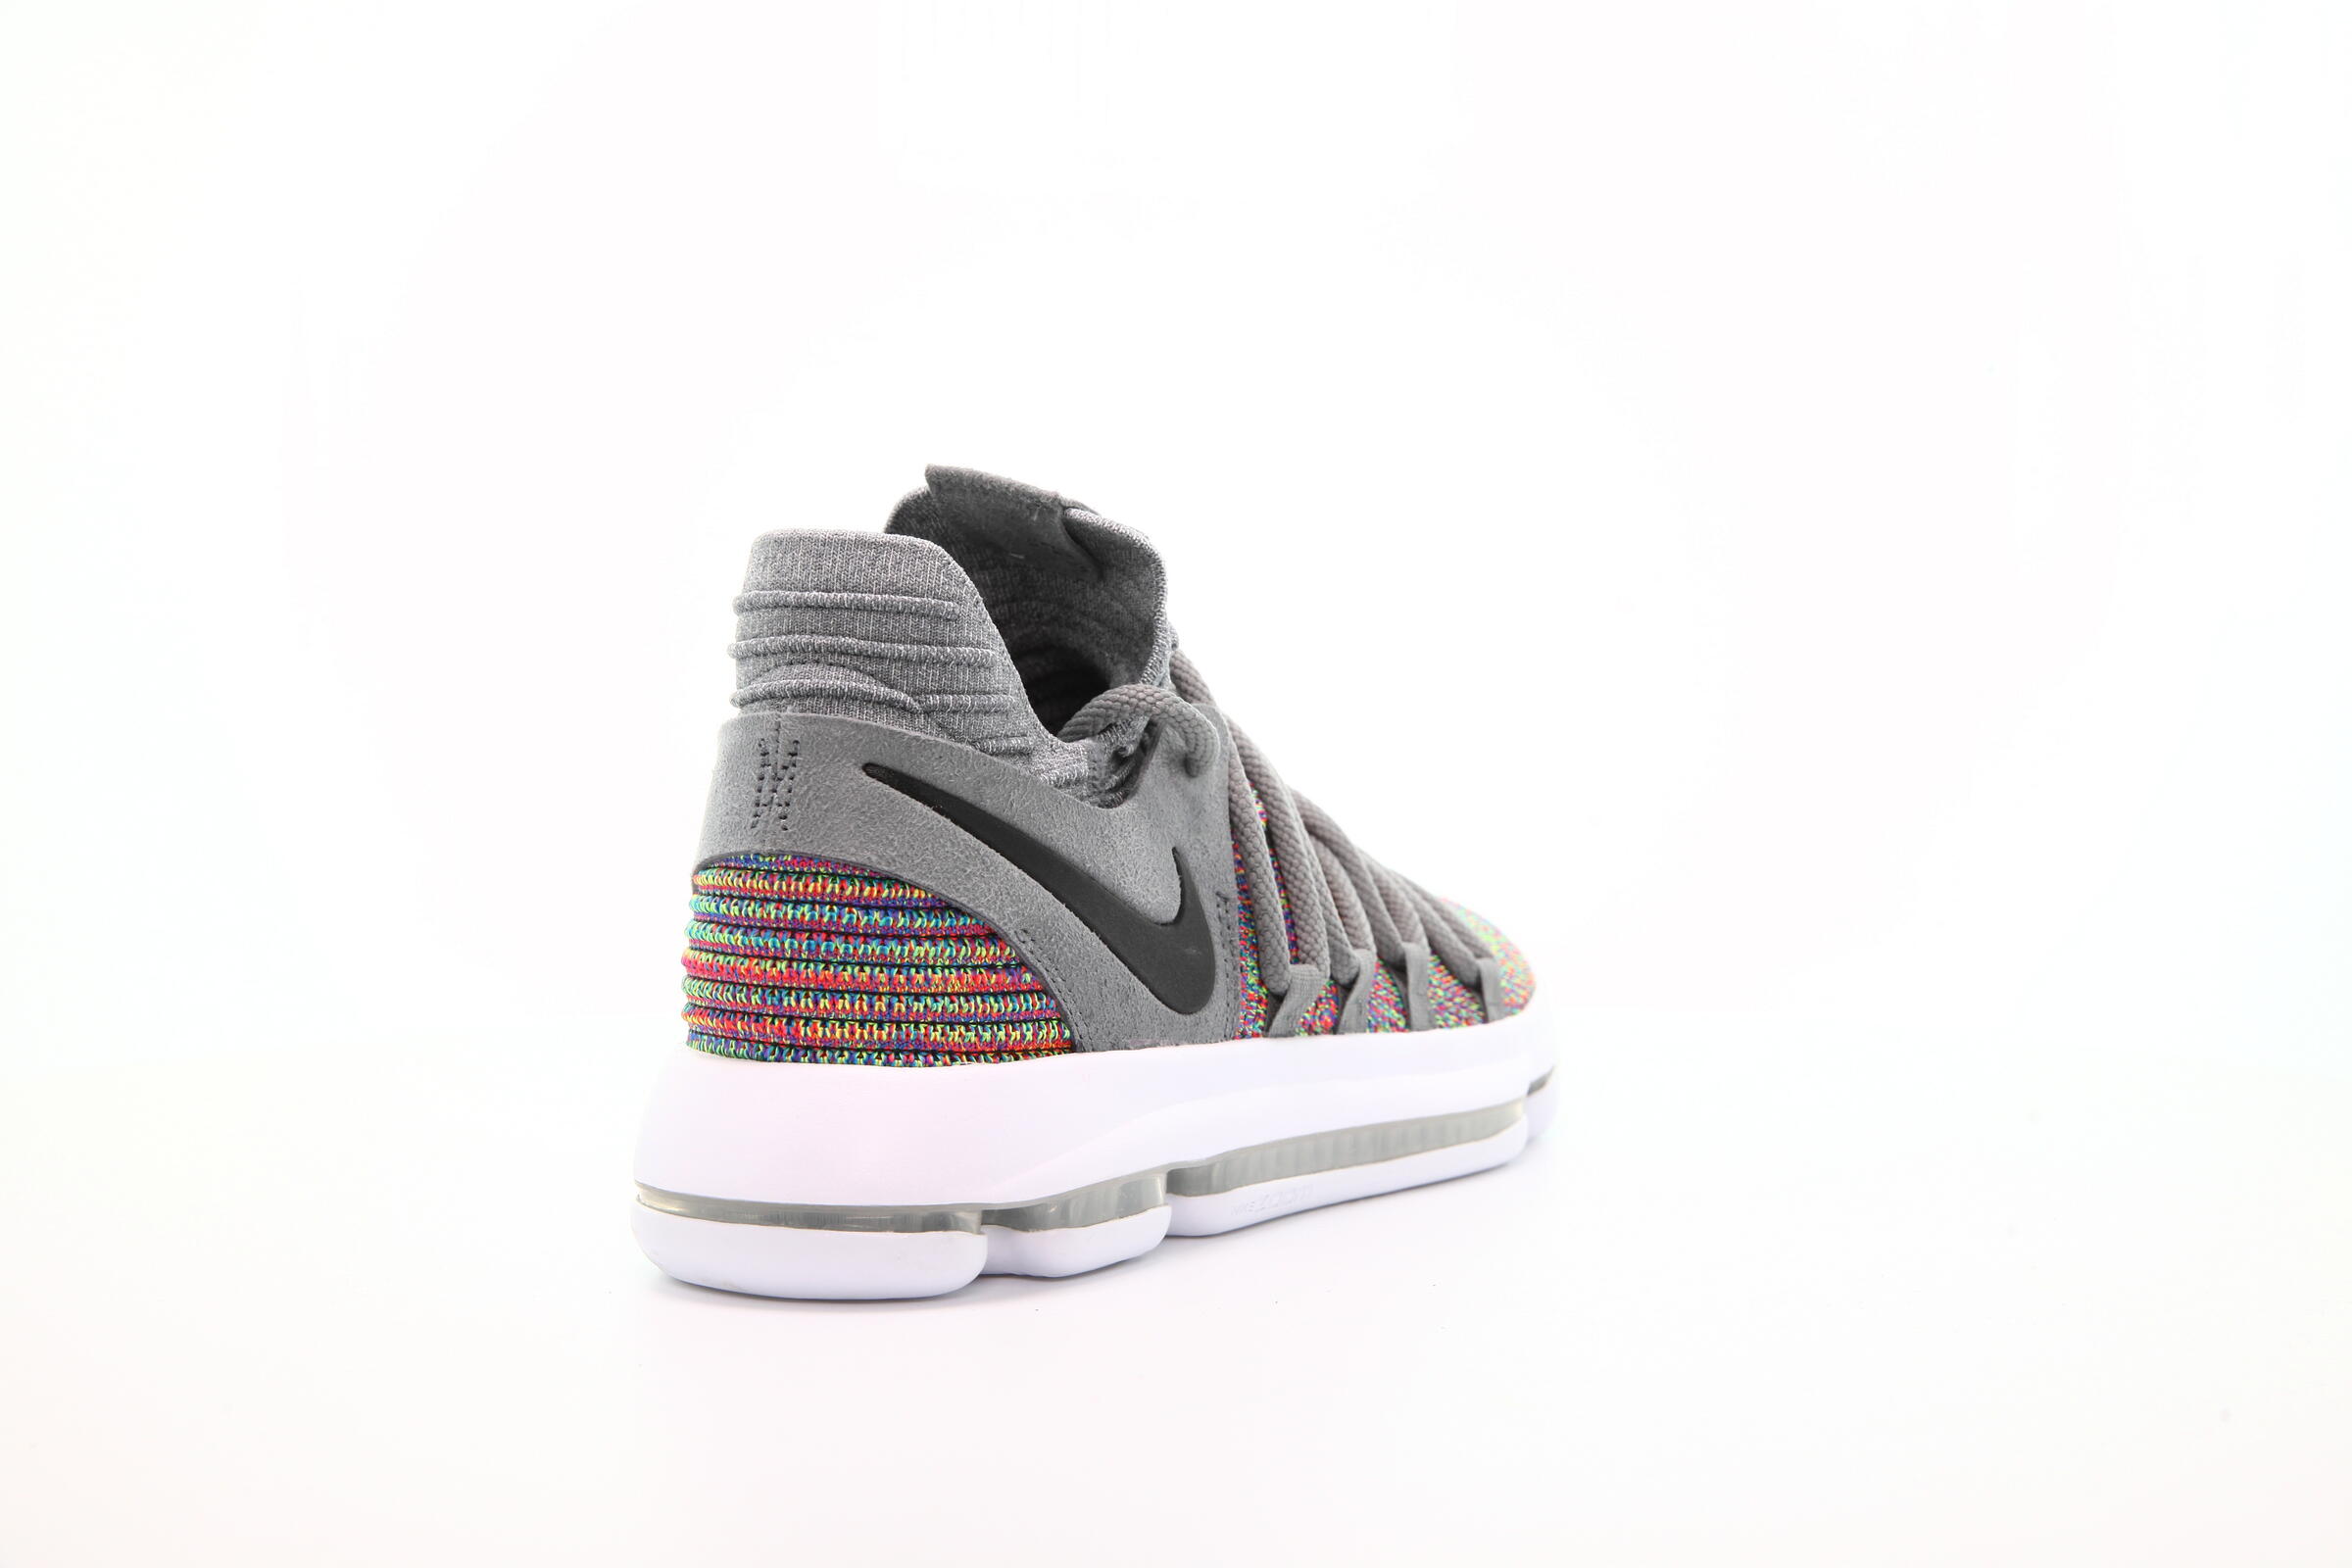 Nike Zoom Kd 10 "Multicolor"